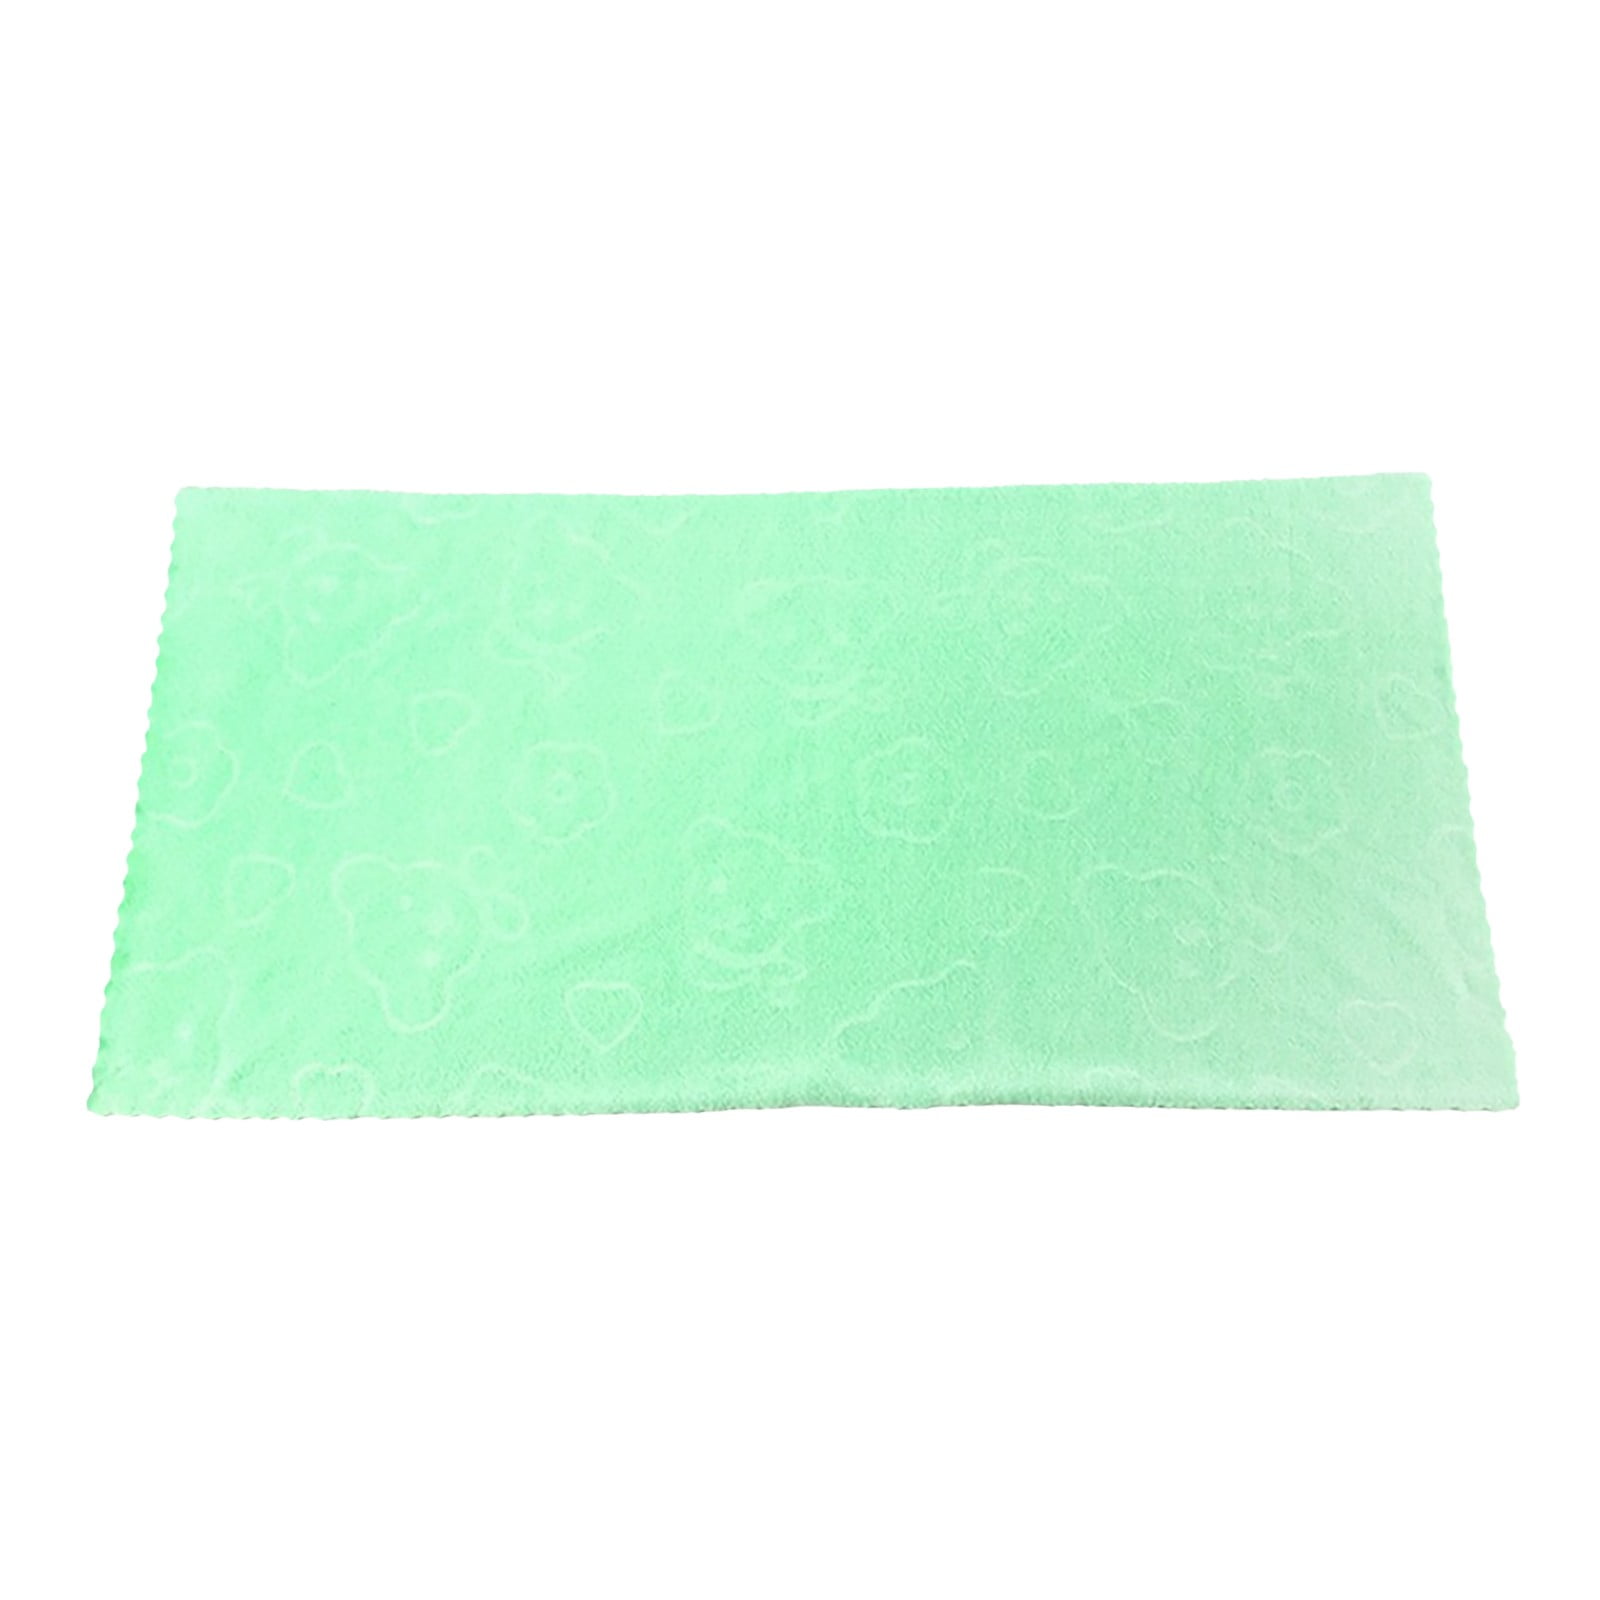 BHXYSGD Kitchen Supplies Microfiber Towels Clean Towels Non-Deformed ...